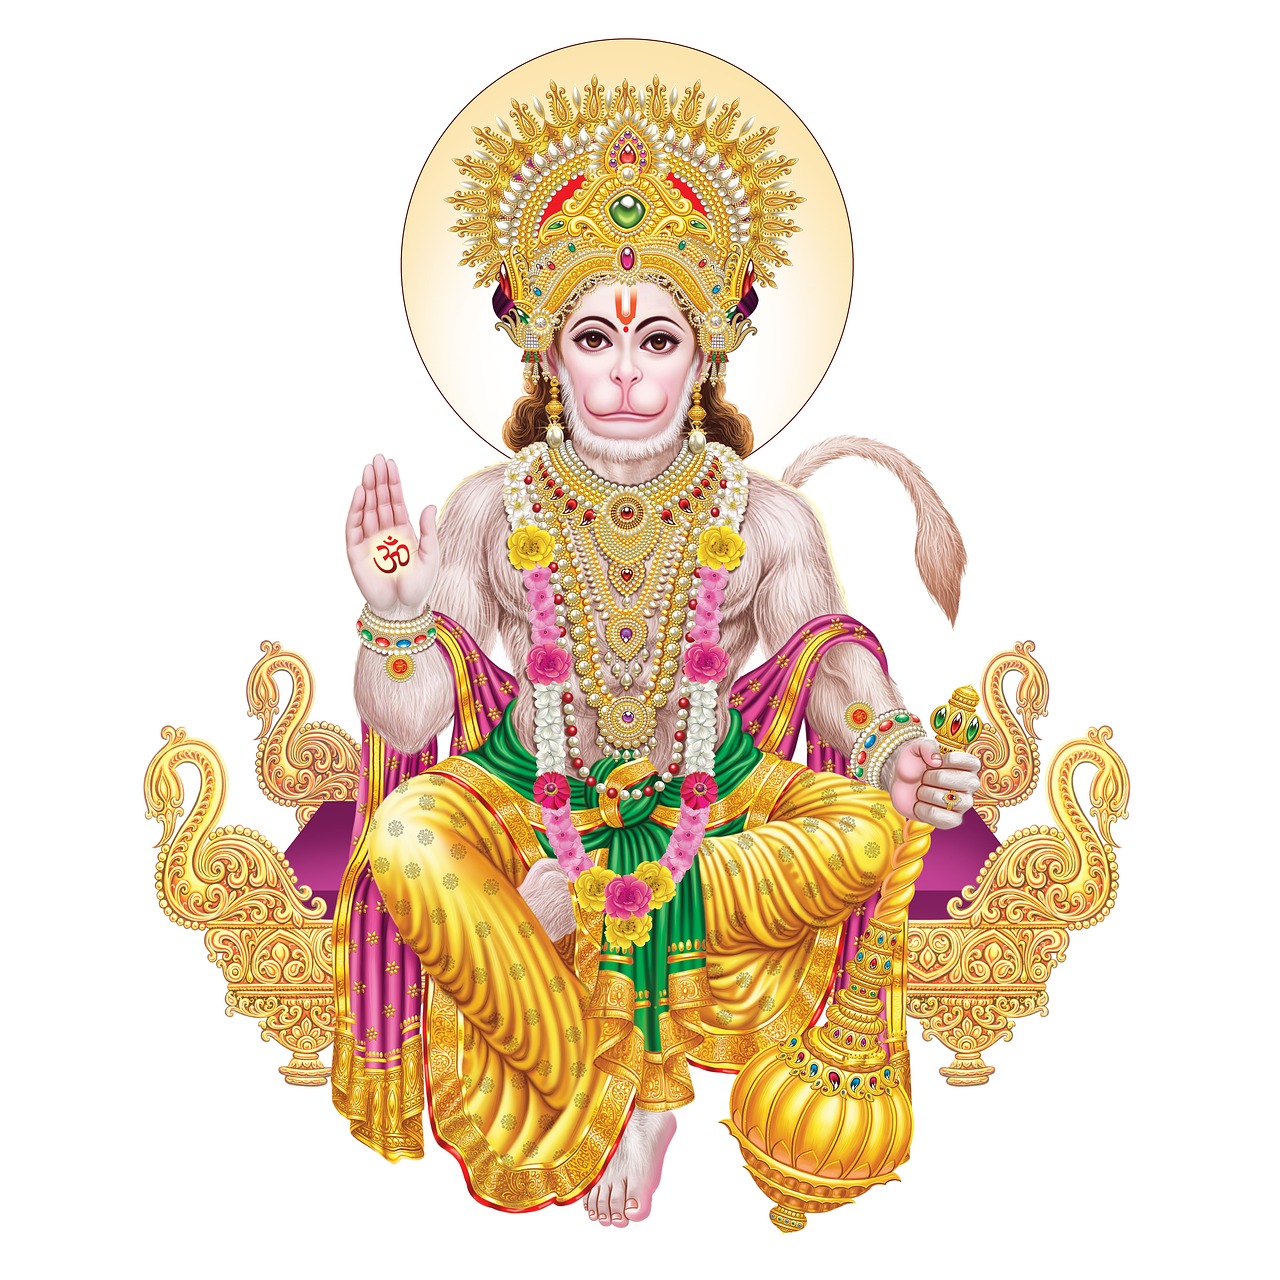 Who Are Parvatis Children Ganesha And Kartikeya?